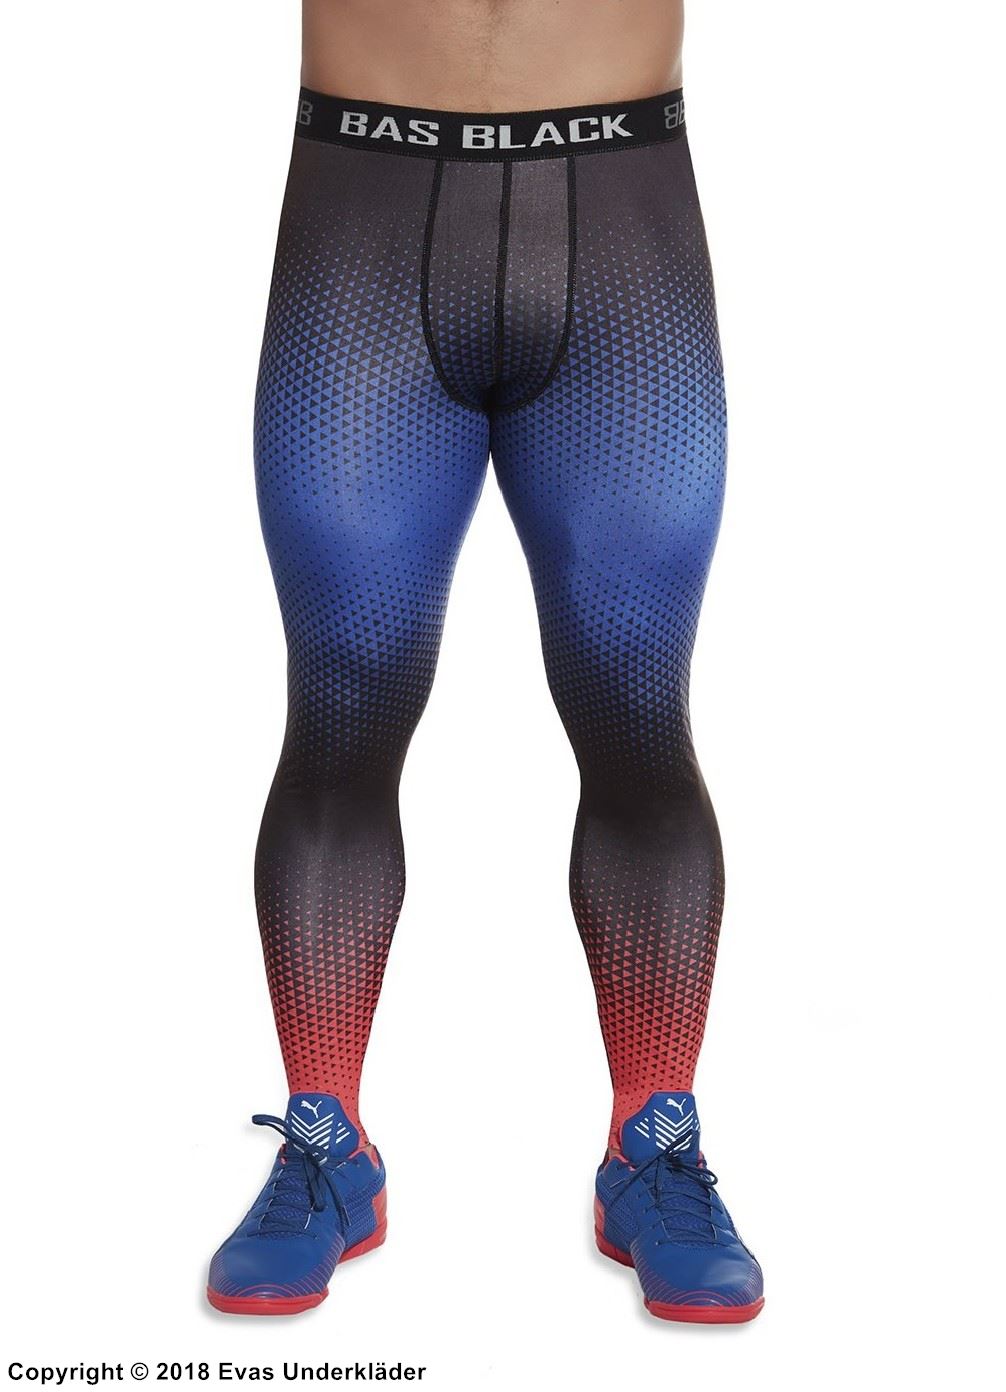 Men's training tights, multi-color